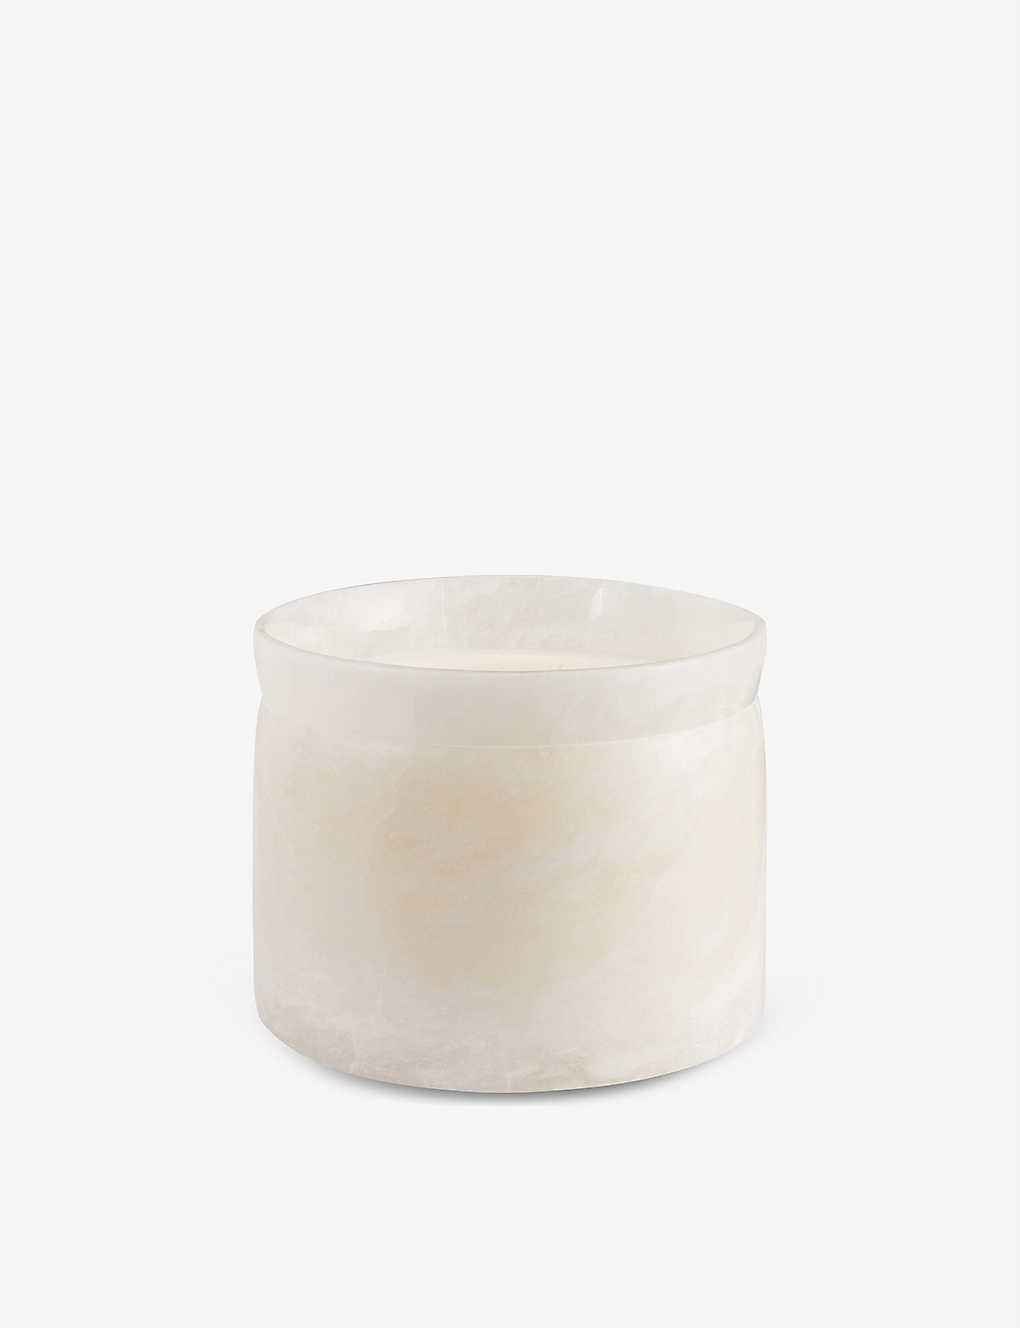 SOHO HOME ビアンコ ベルガモット アルティメット センテッドキャンドル 10kg Bianco Bergamont ultimate scented candle 10kg